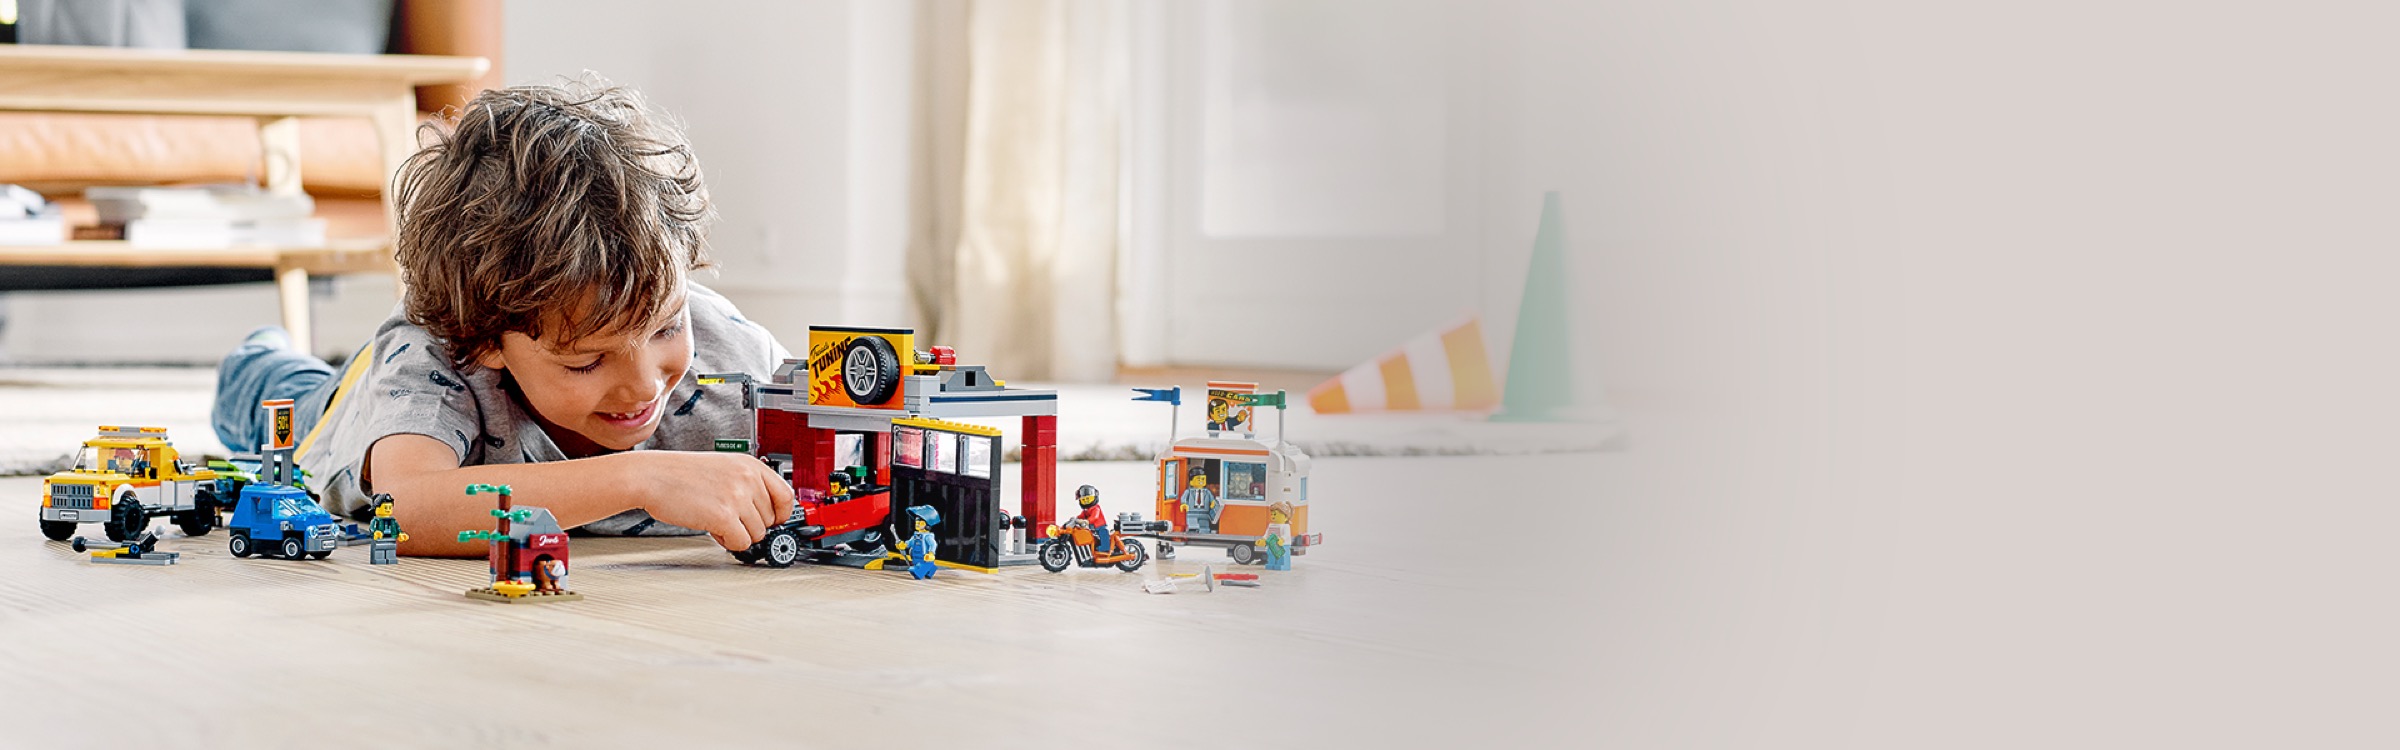 LEGO City 60258 Tuning Workshop Car Garage Block Building Set with 7 Minifigures 